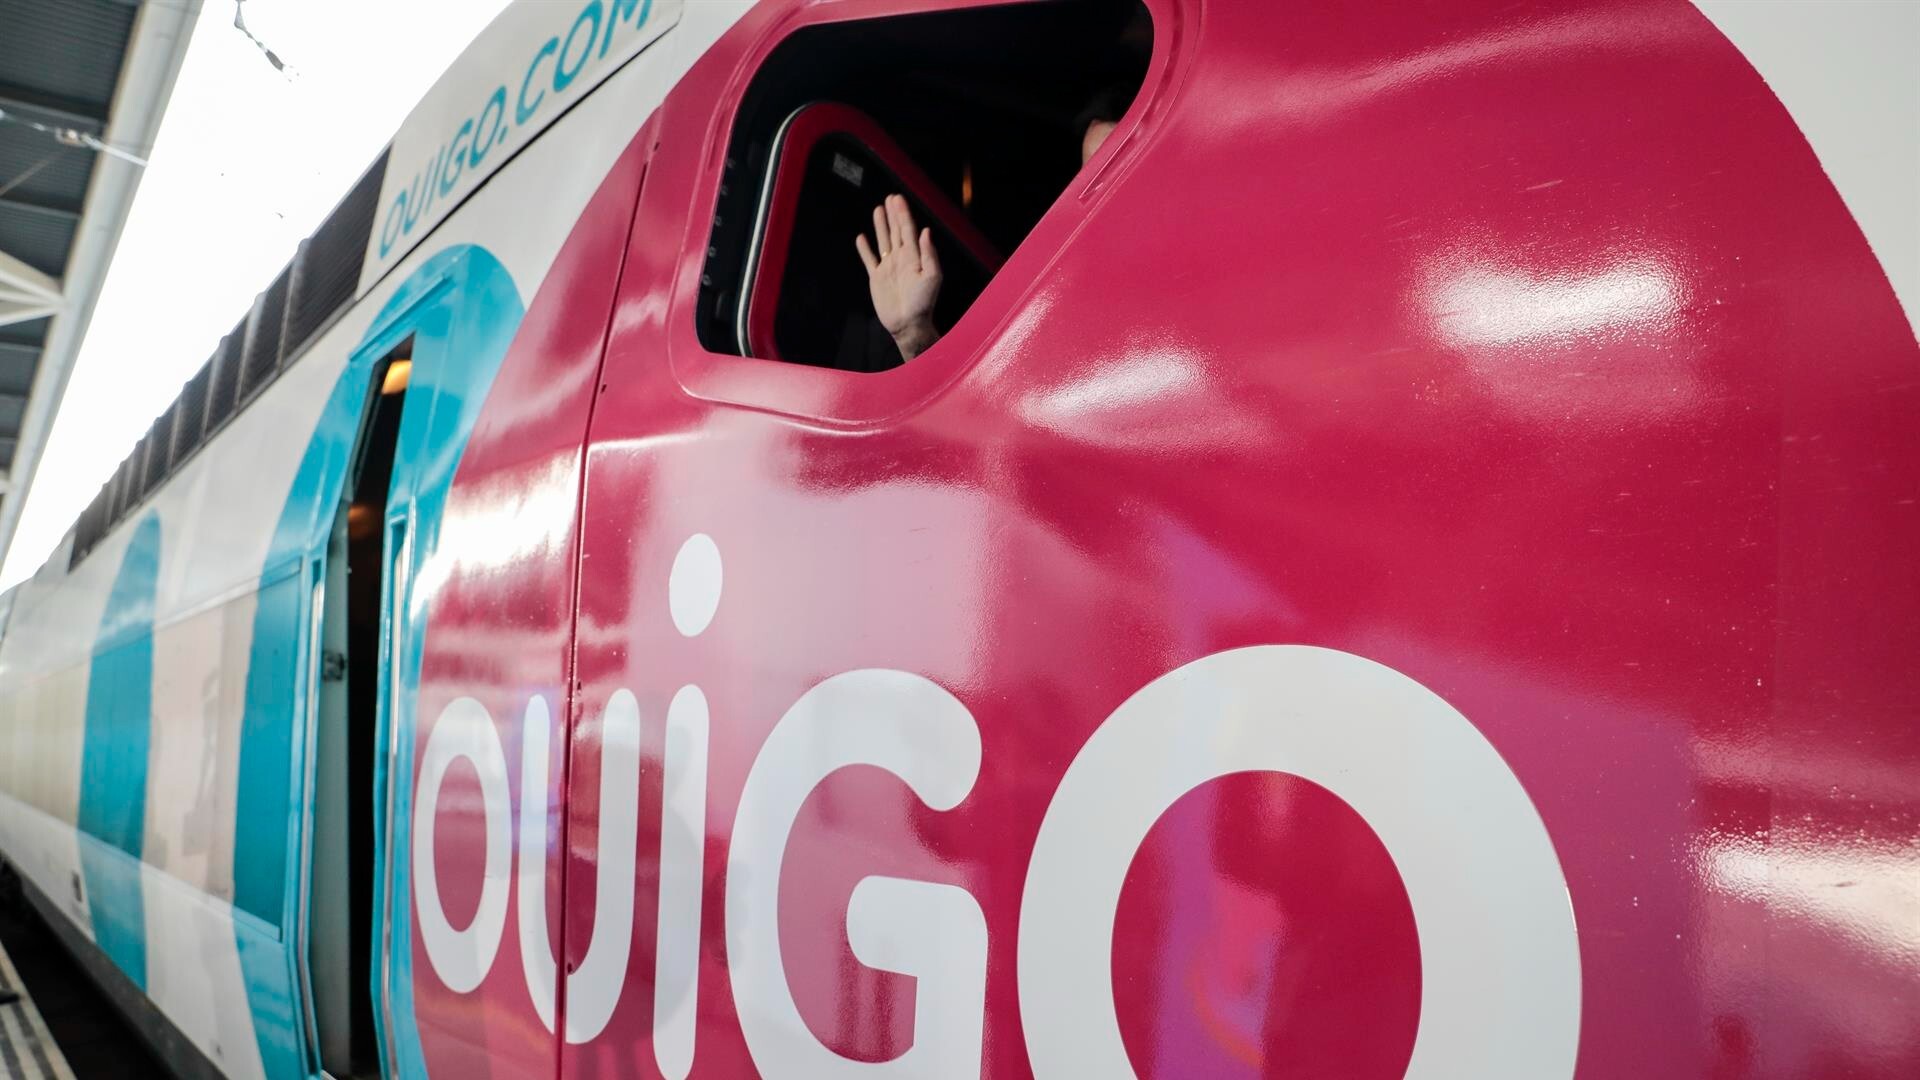 Ouigo sells train tickets for 9 euros on September 27 only